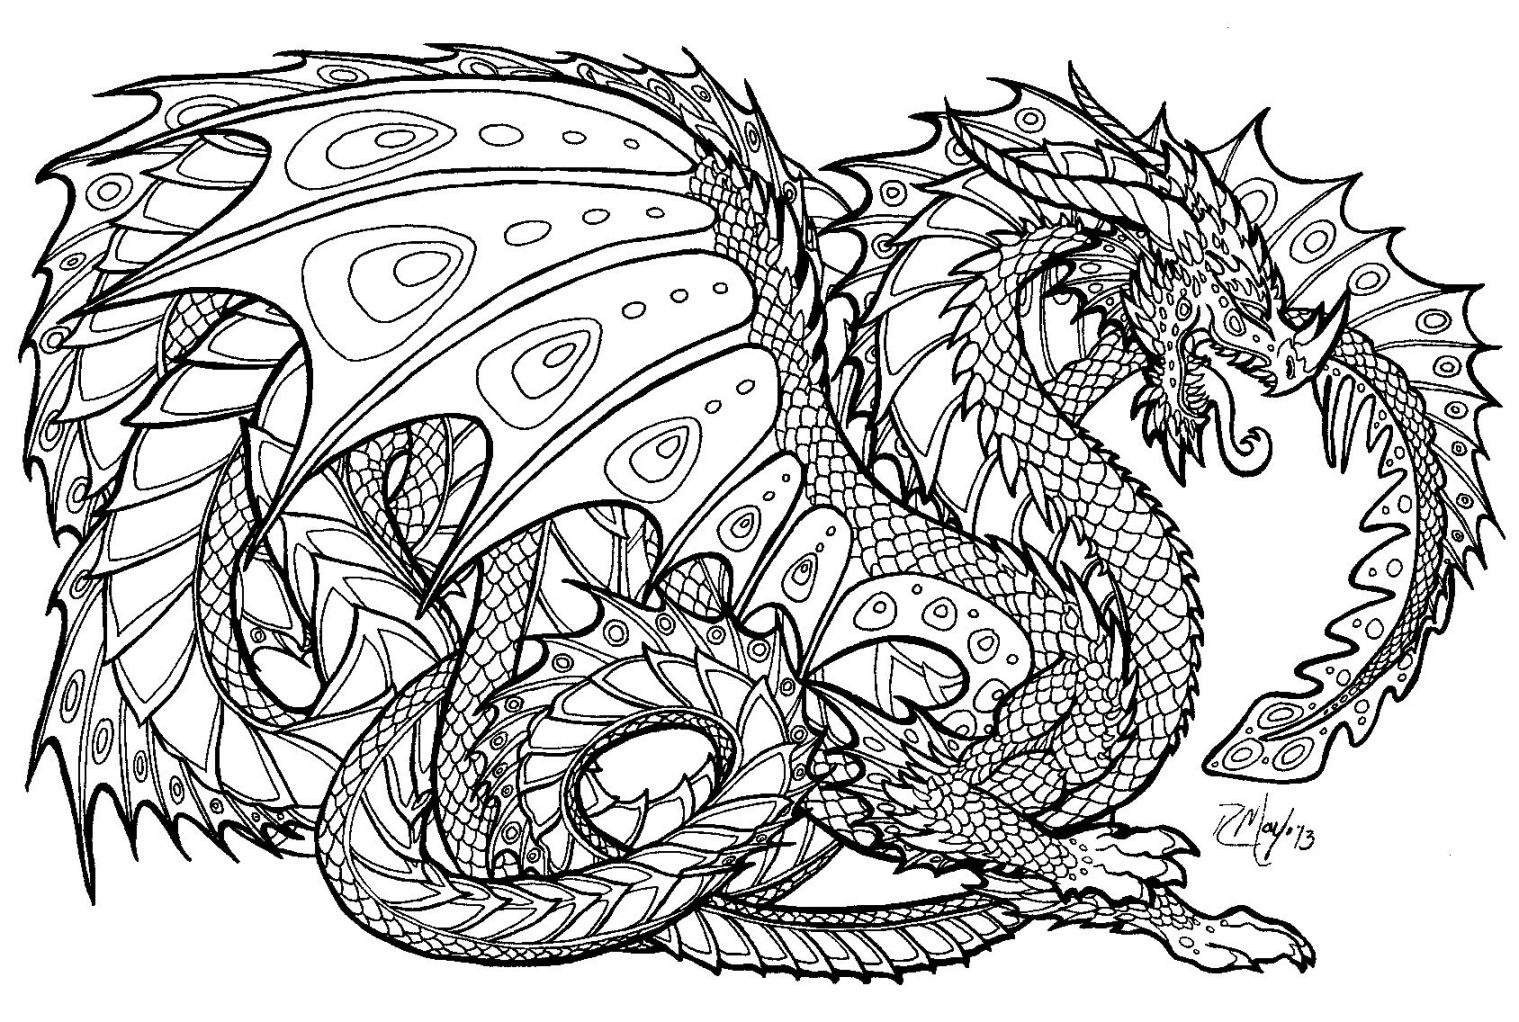 Free Printable Dragon Coloring Pages - Printable - free printable coloring pages for adults advanced dragons - Google